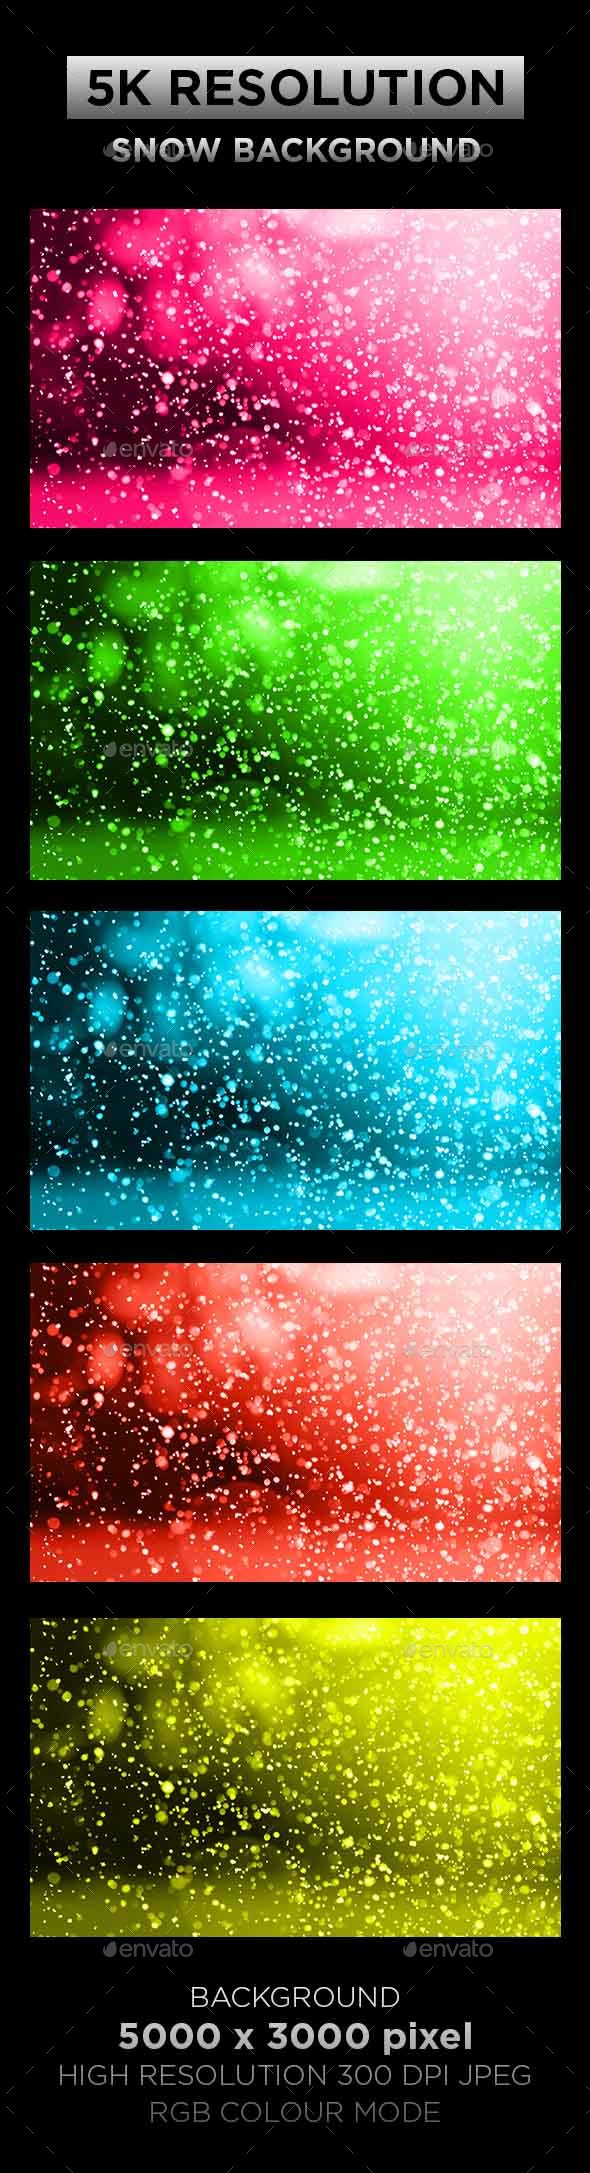 Snow Texture Background 001